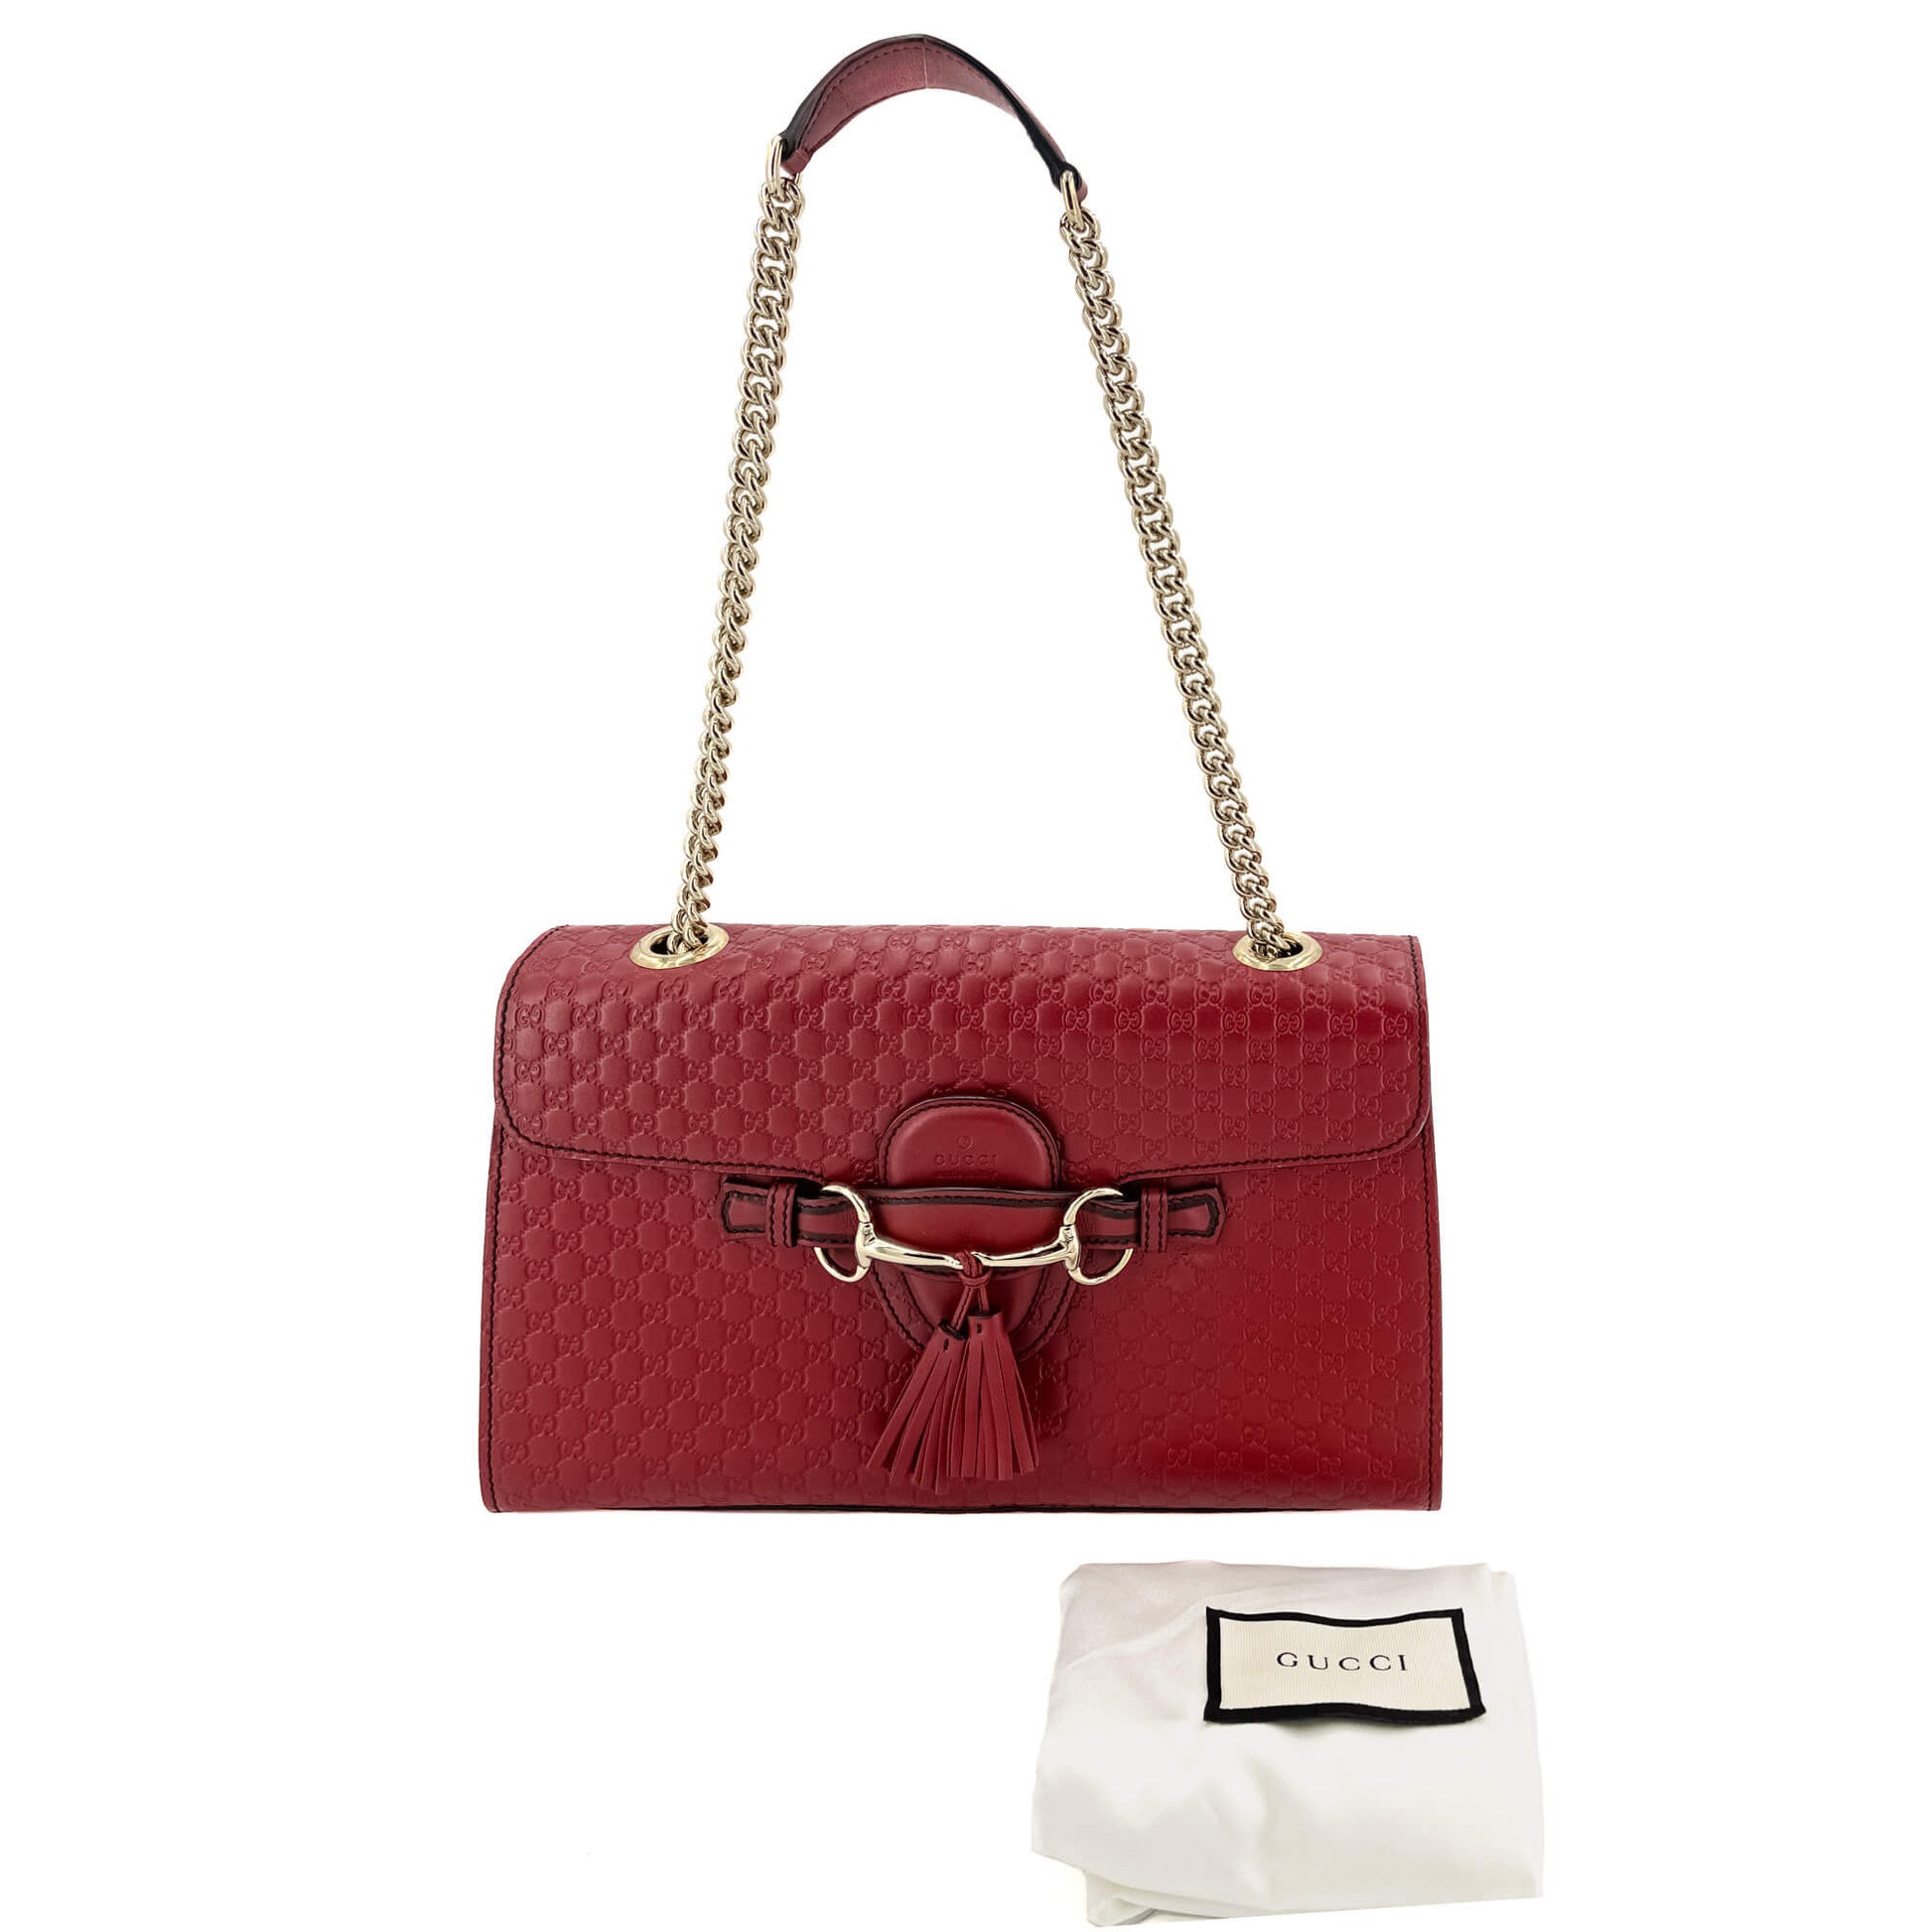 Pre-owned Chanel Handbags - Shop Prestige for best preloved prices